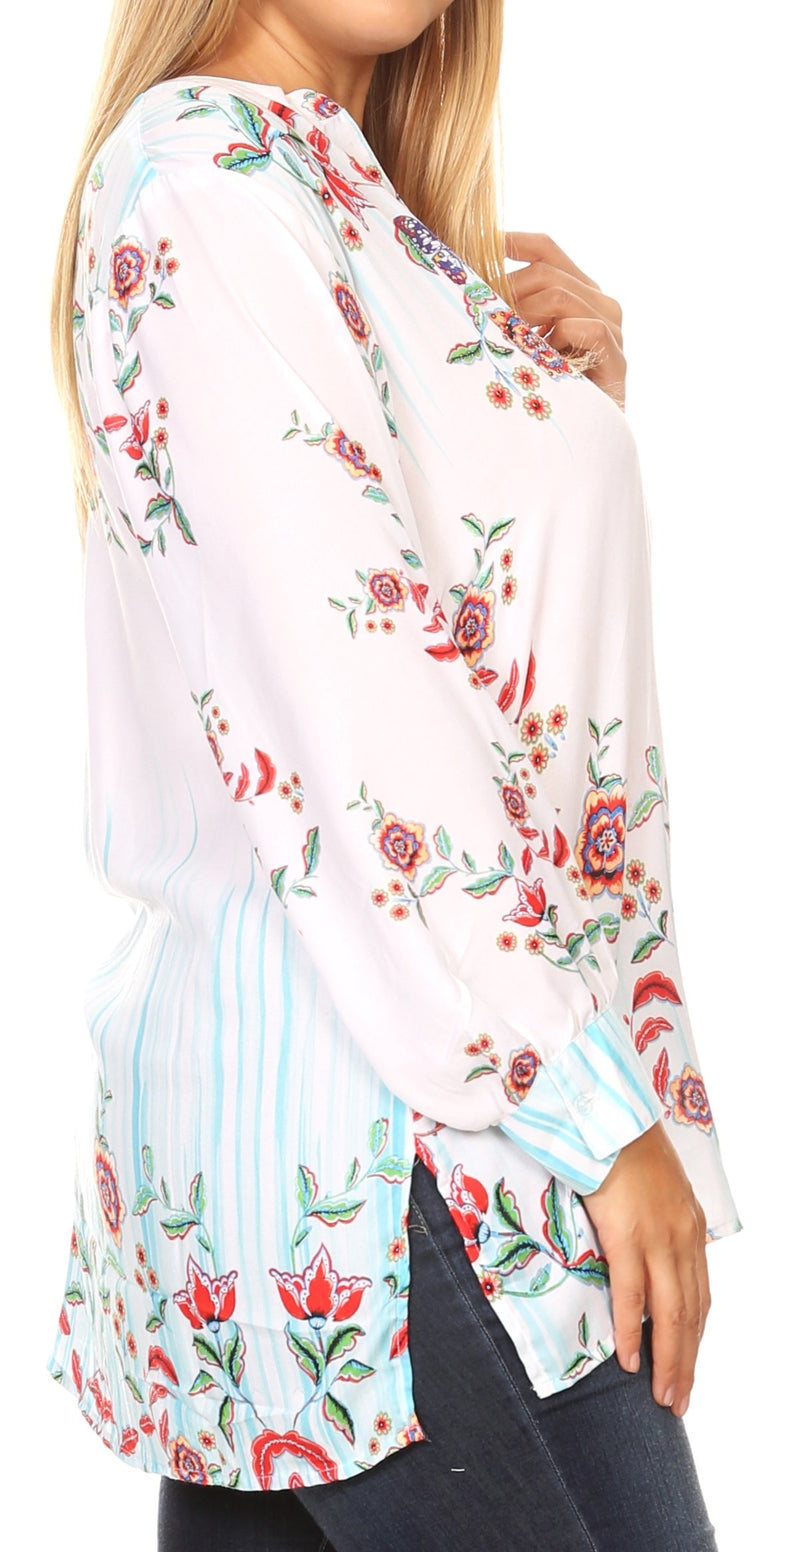 Sakkas Fara Women's Casual Floral Print Lightweight Long Sleeve Blouse Tunic Top